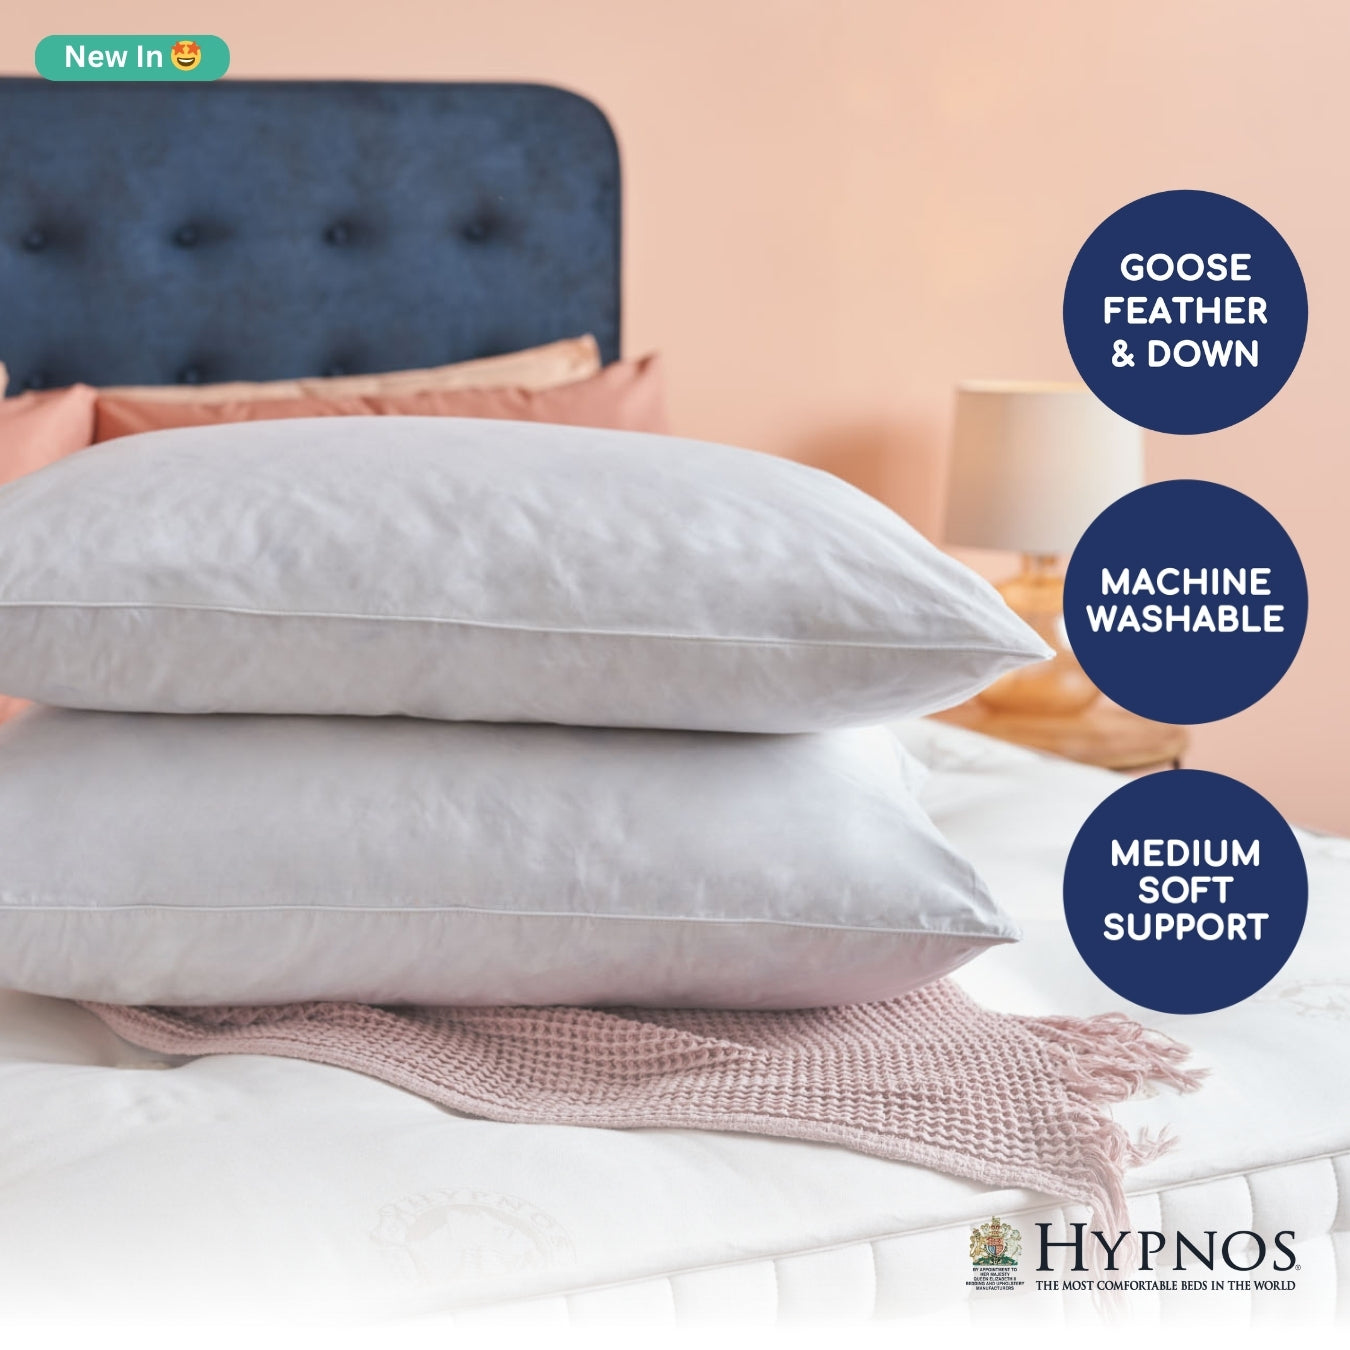 Hypnos Goose Feather & Down Pillow